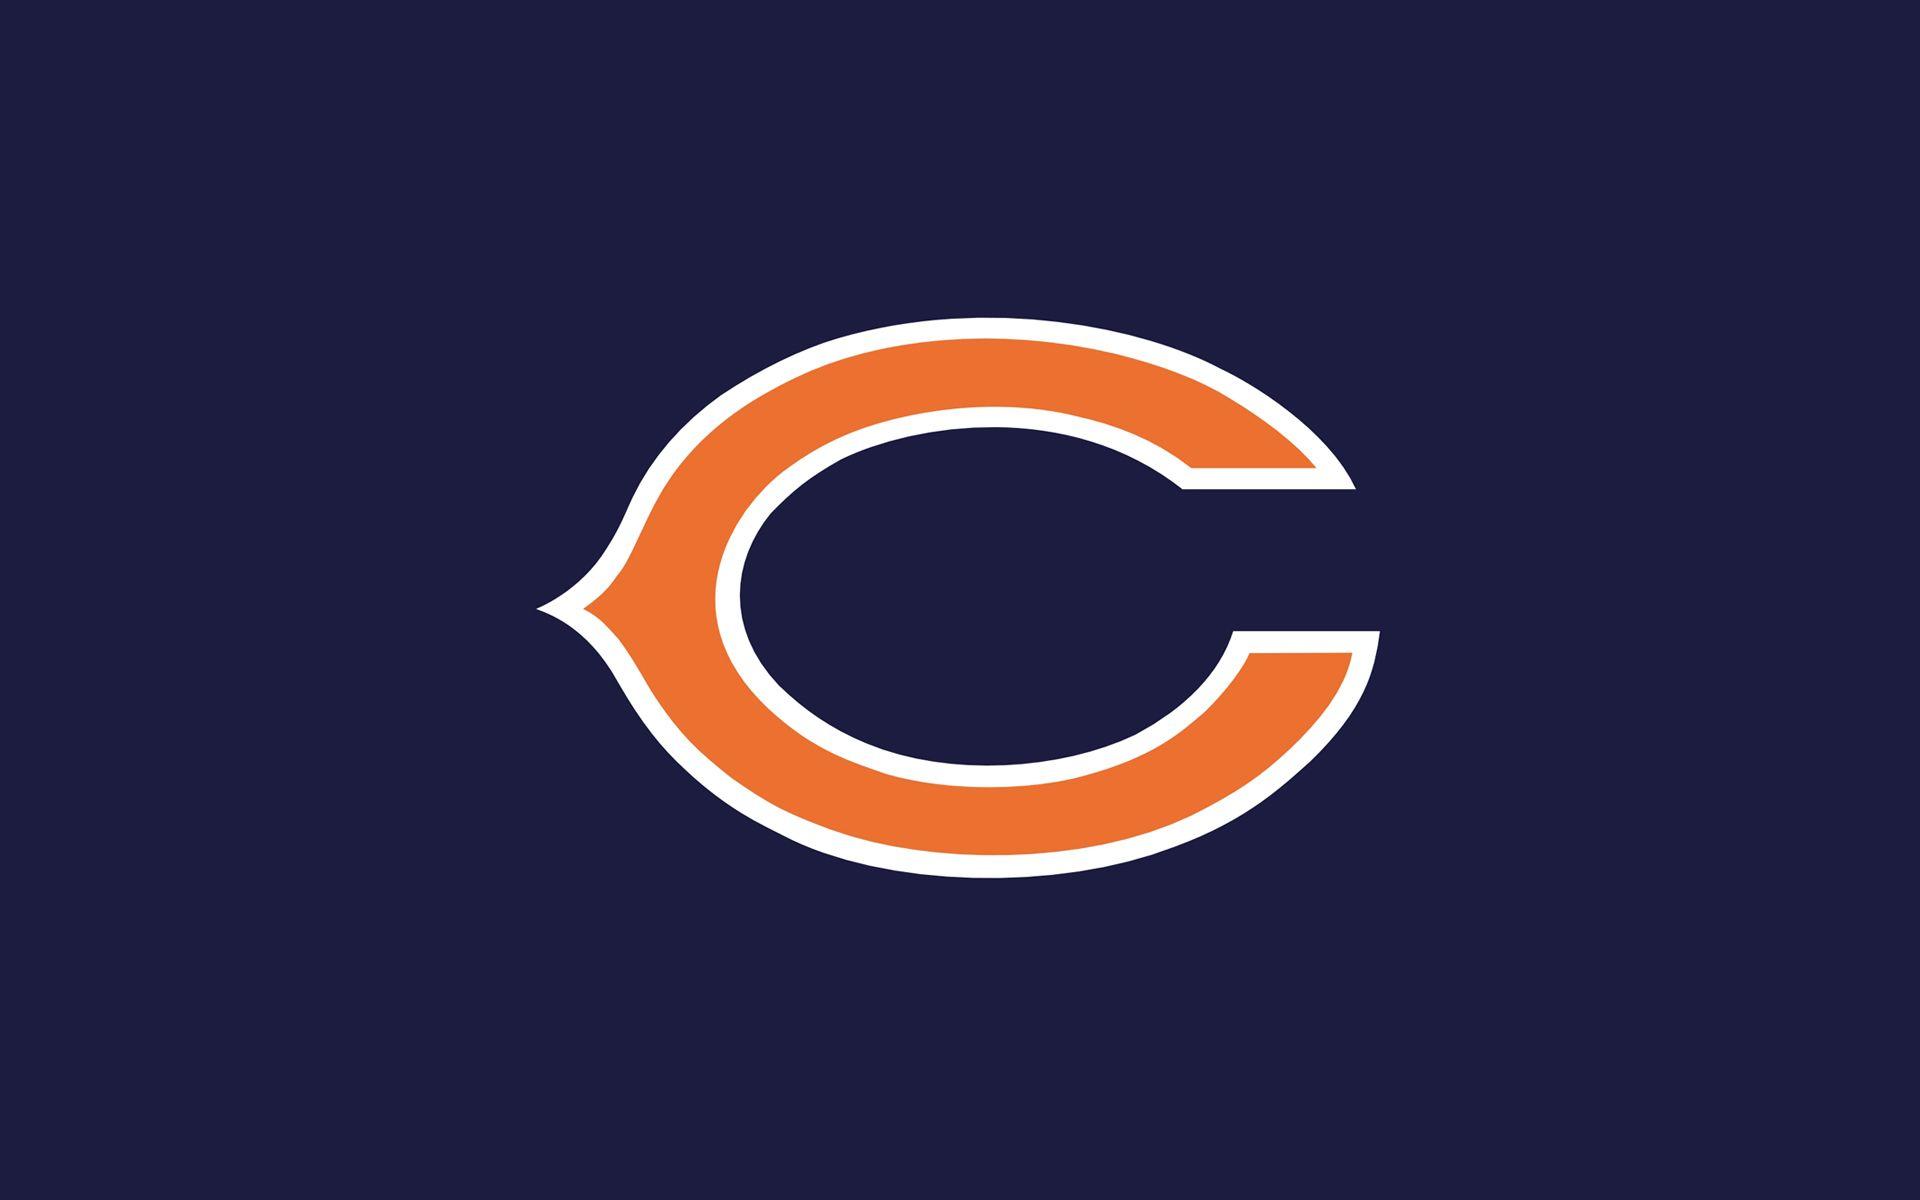 Chicago Bears  Chicago bears logo, Chicago bears wallpaper, Chicago bears